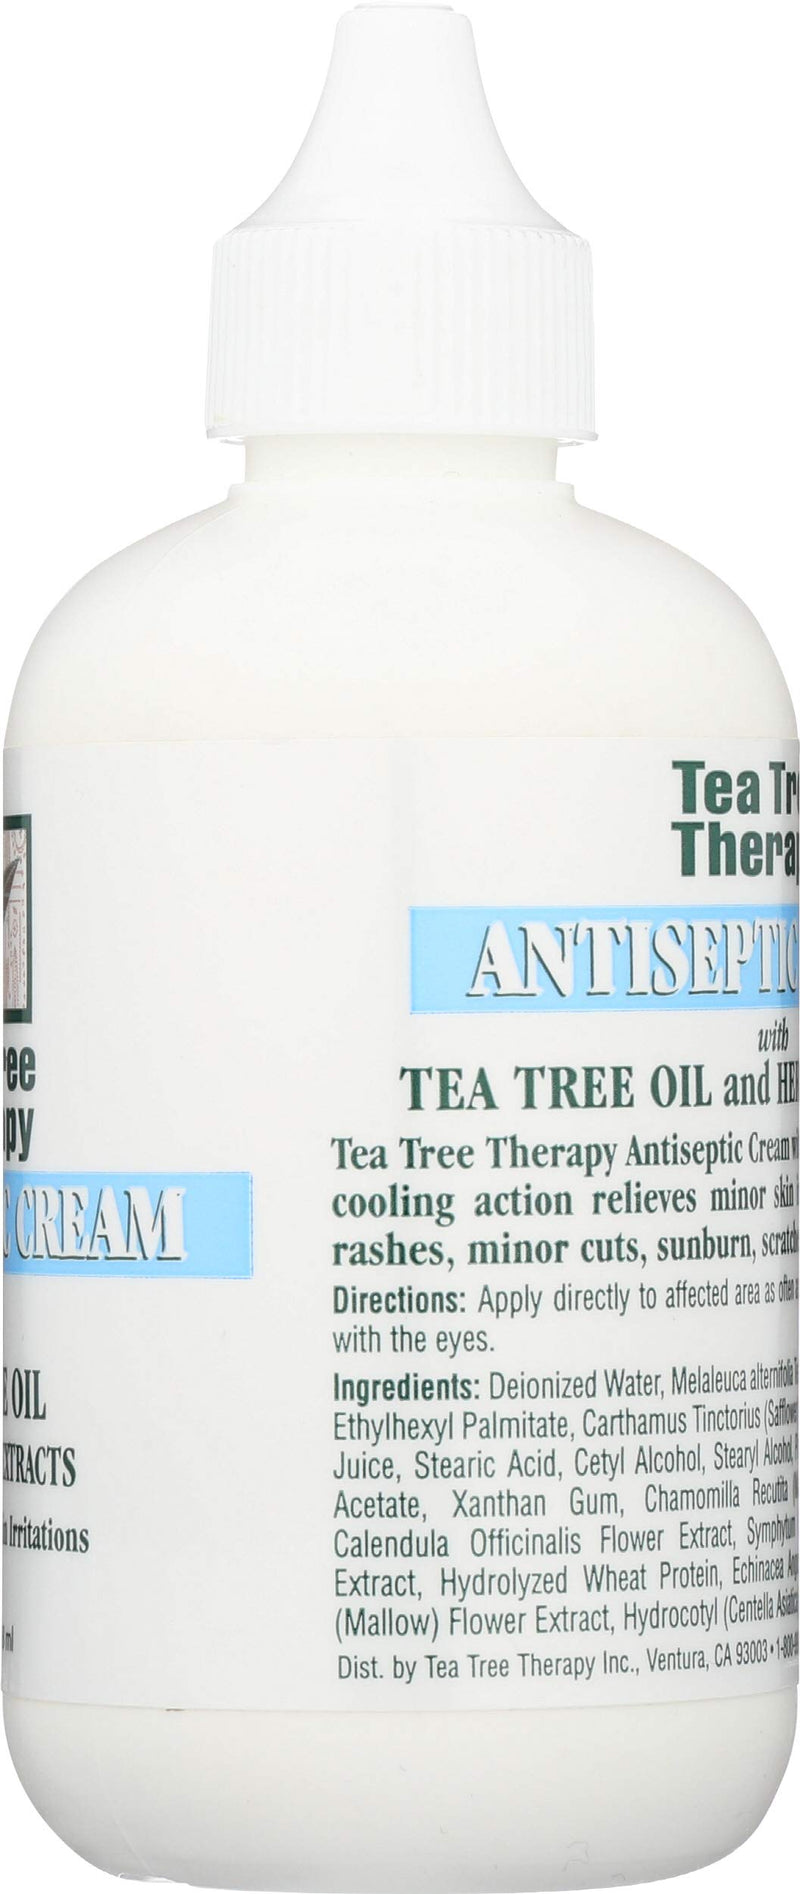 Tea Tree Therapy Antiseptic Cream, 4 Ounce - BeesActive Australia